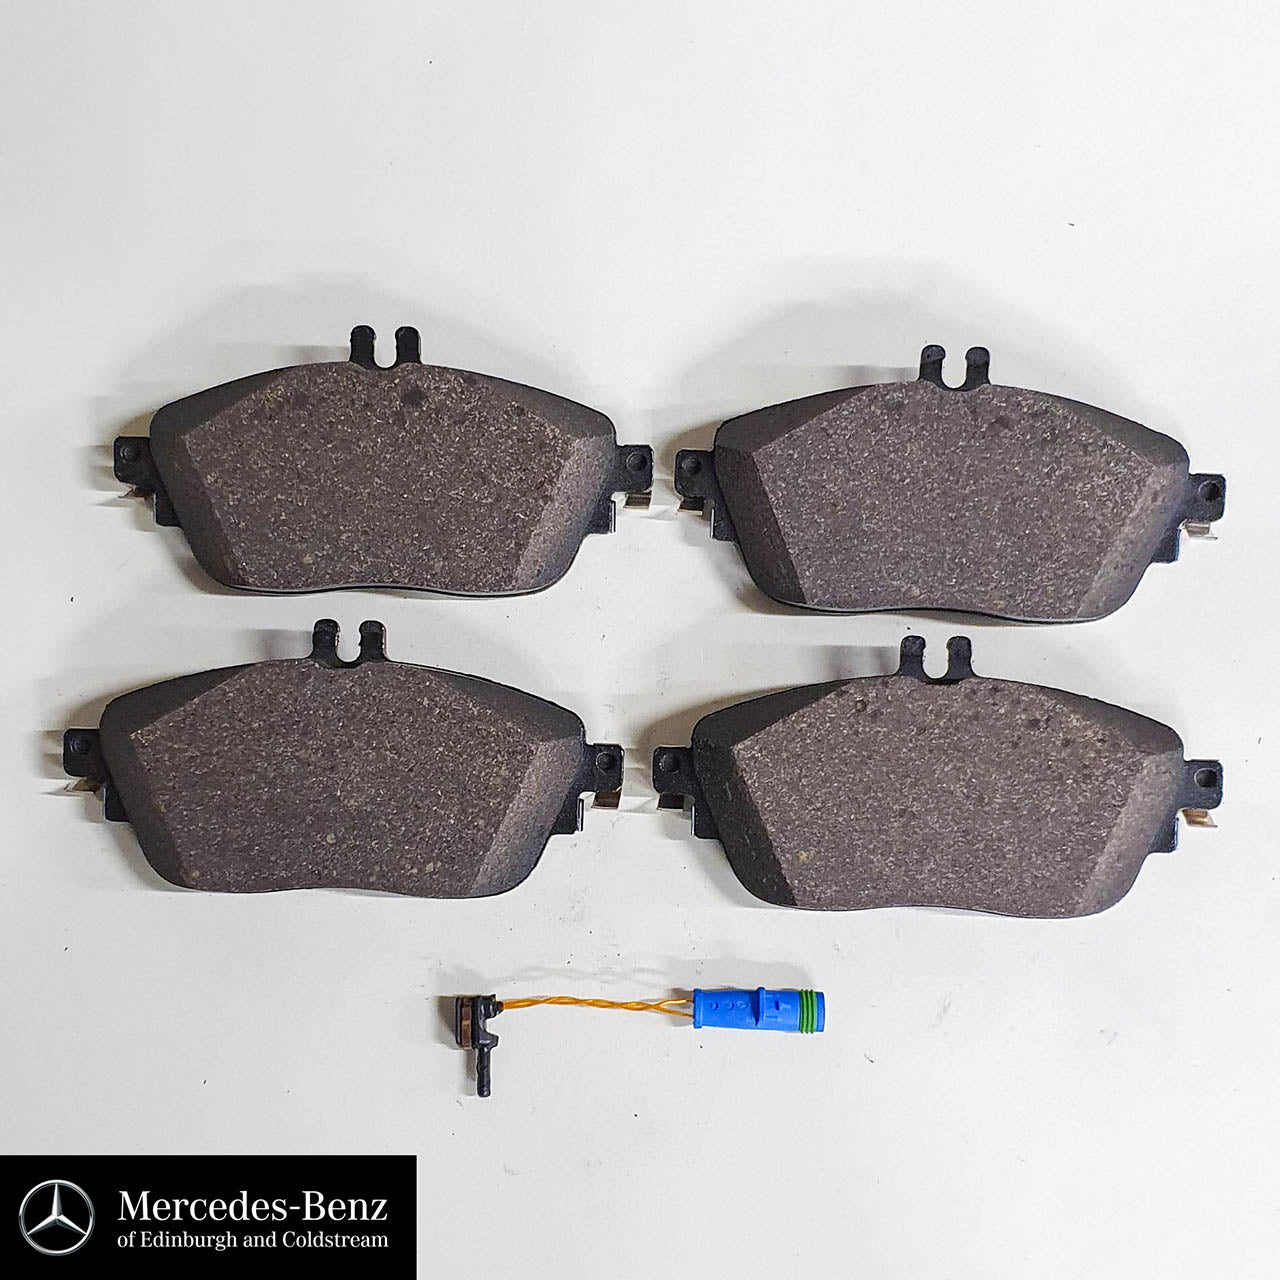 Genuine Mercedes-Benz Front Brake Pads and sensor A Class, B Class, CLA, GLA